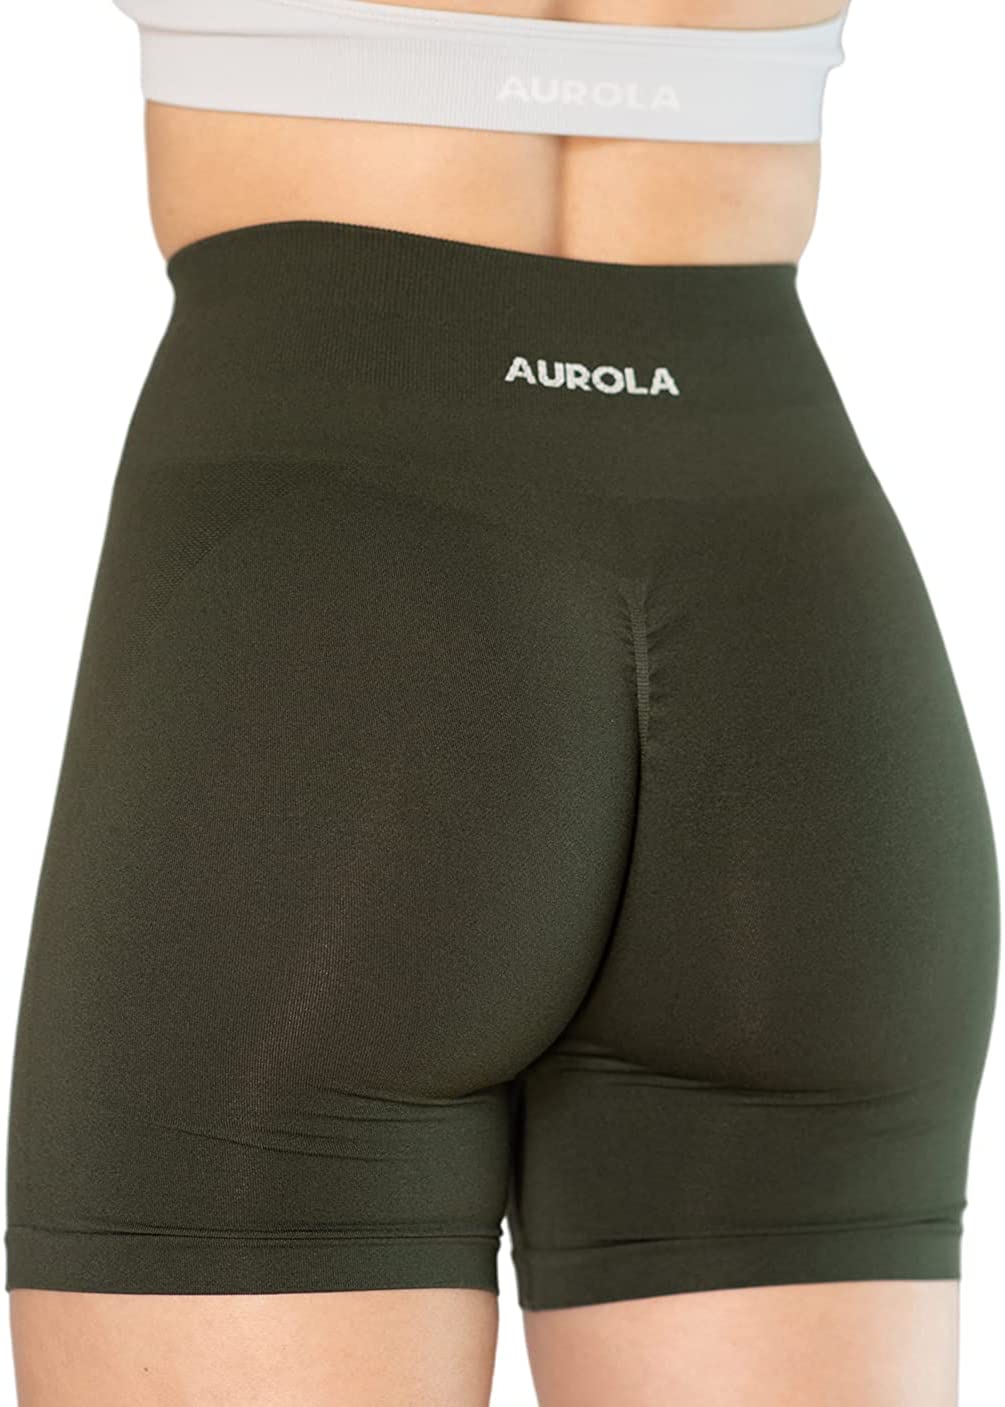 AUROLA Energetic Workout Shorts for Women Seamless Scrunch